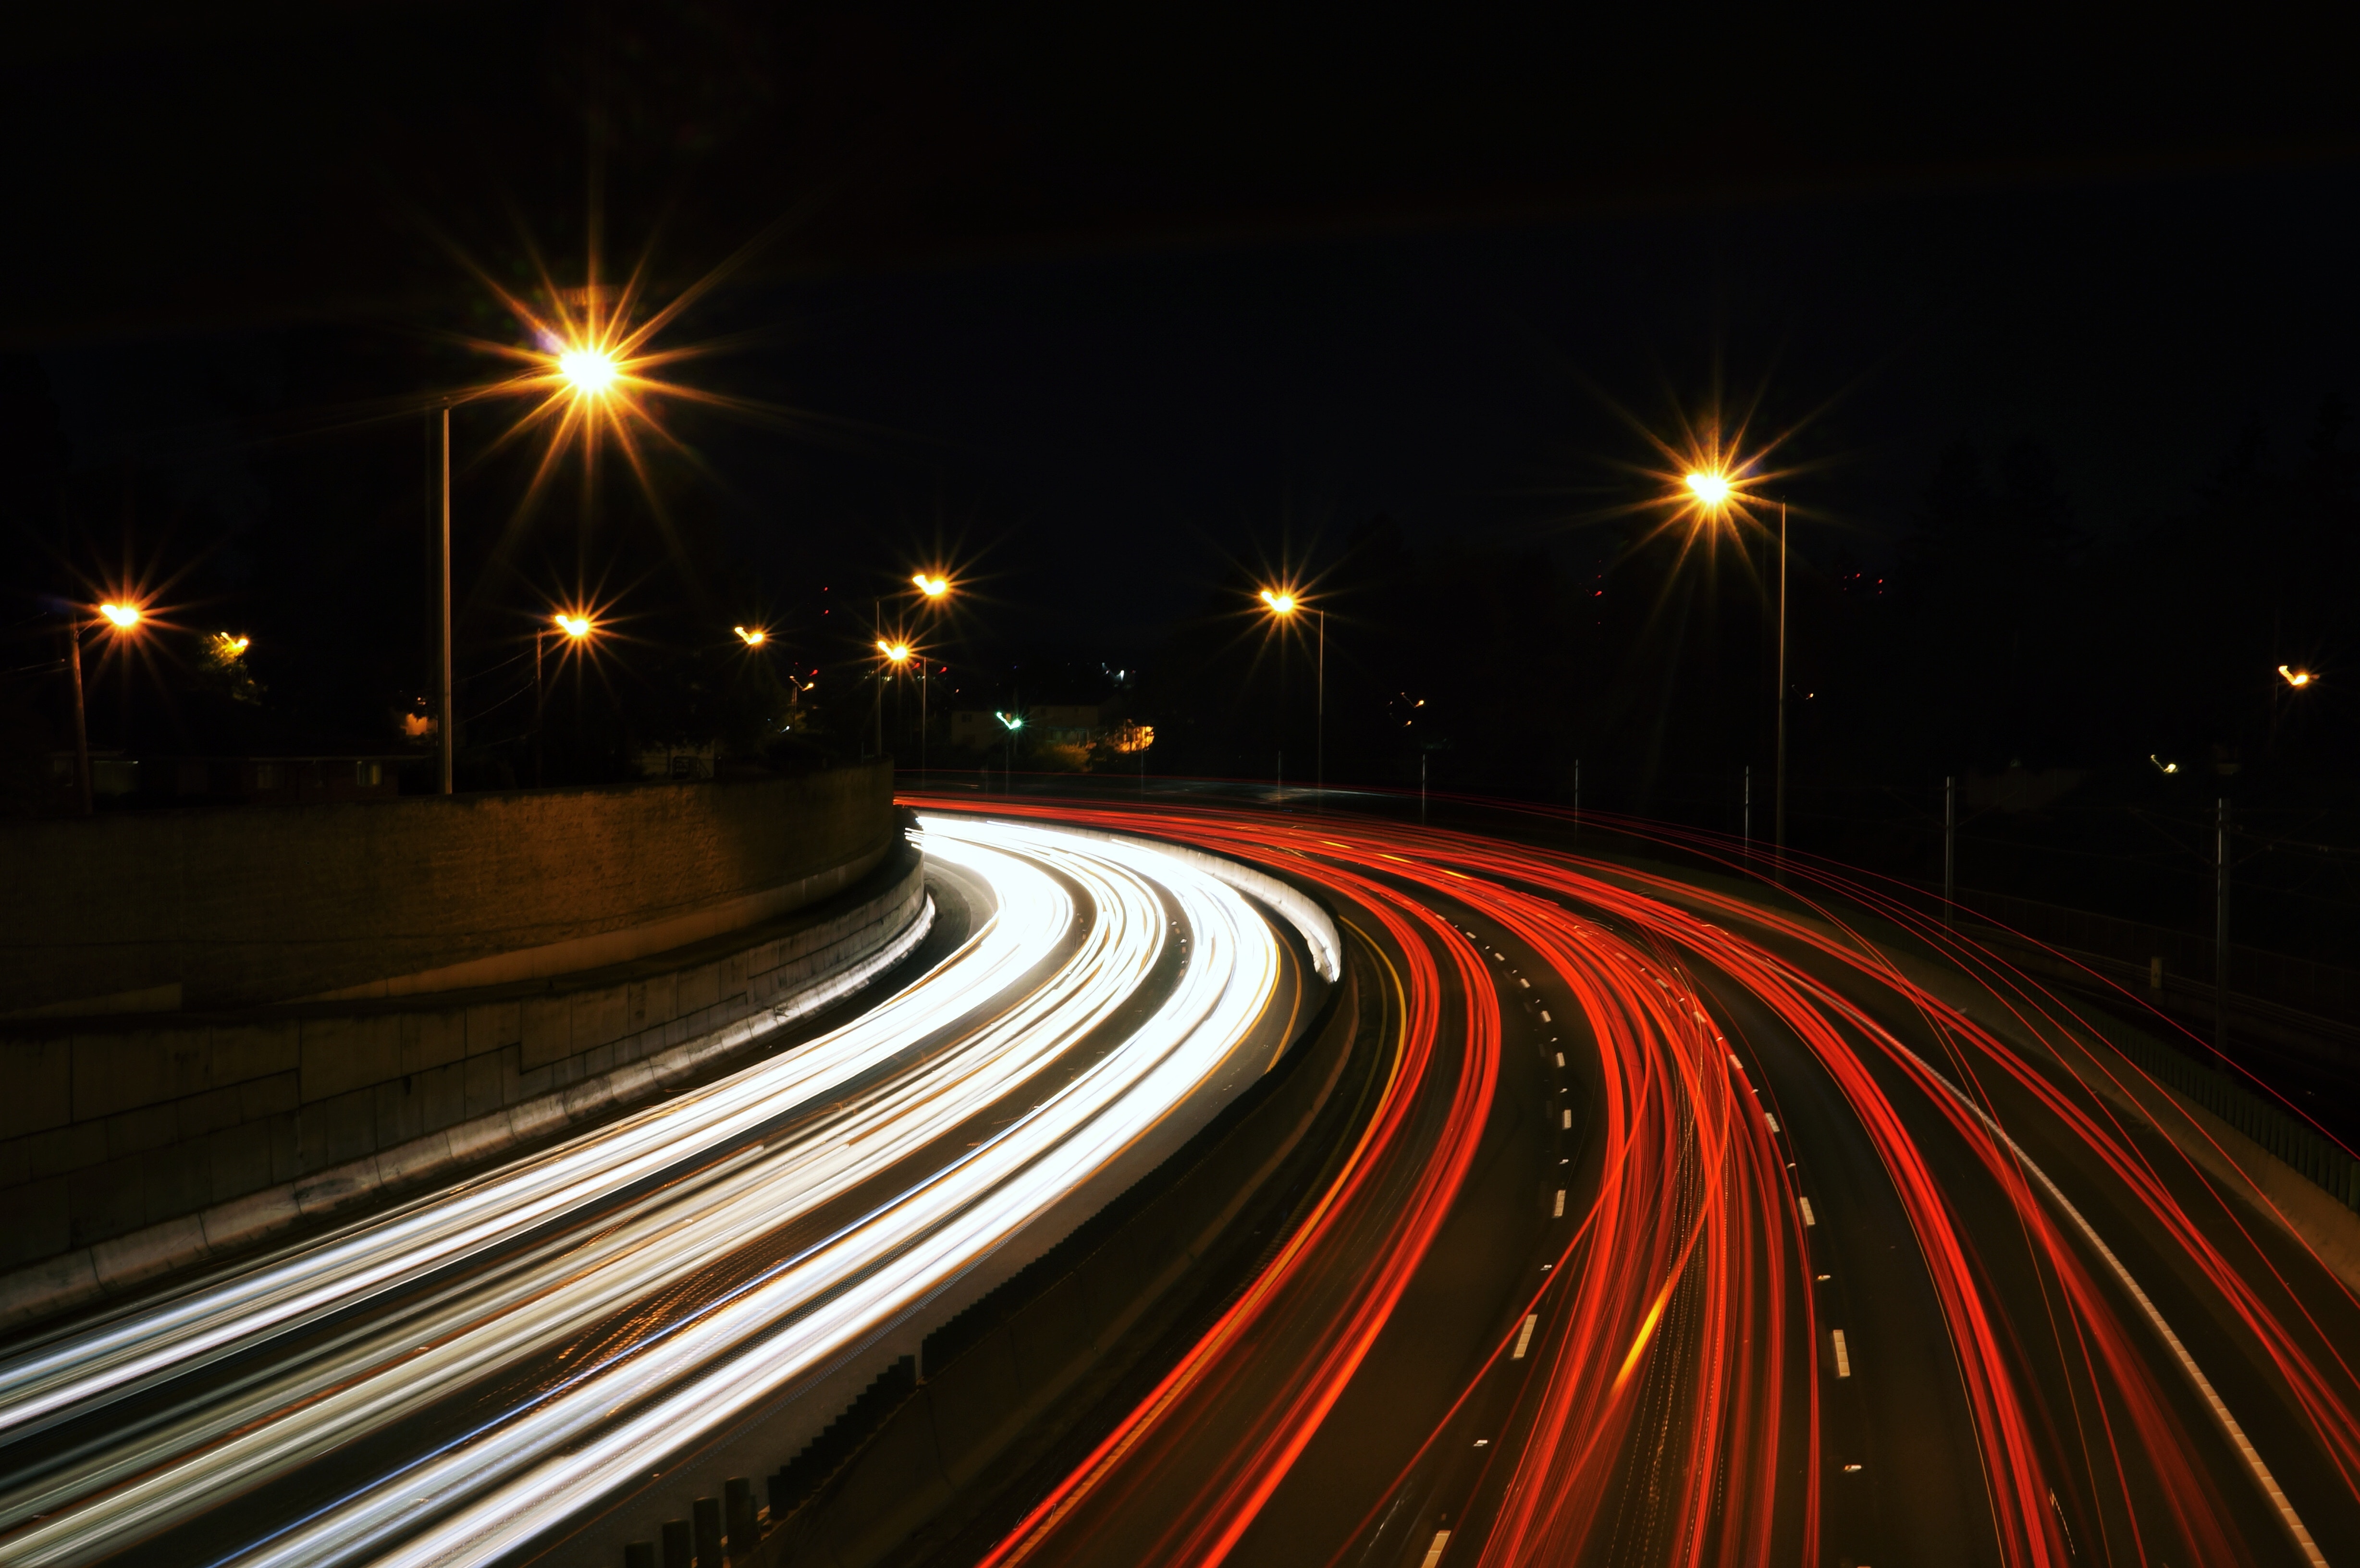 New GPP criteria for road lighting & traffic signals